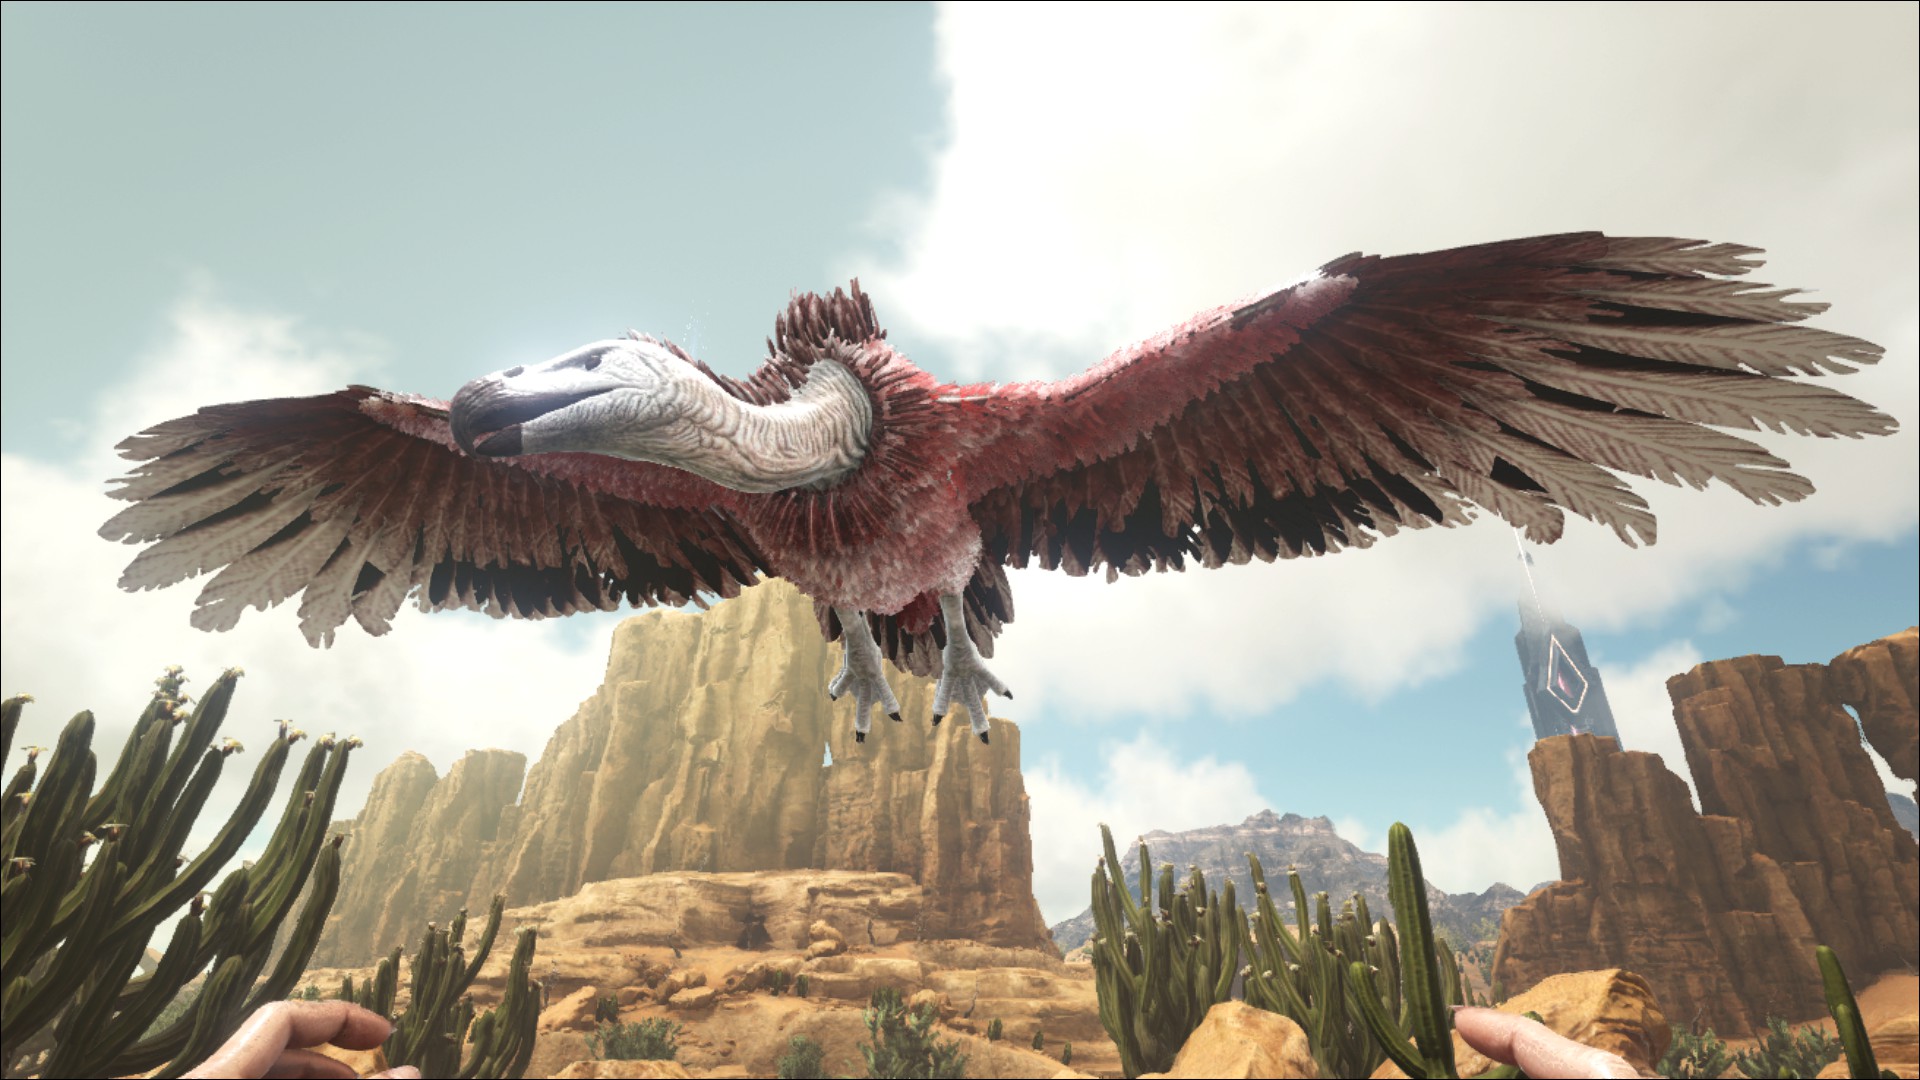 Vulture Official ARK: Survival Evolved Wiki. ark.gamepedia.com. 